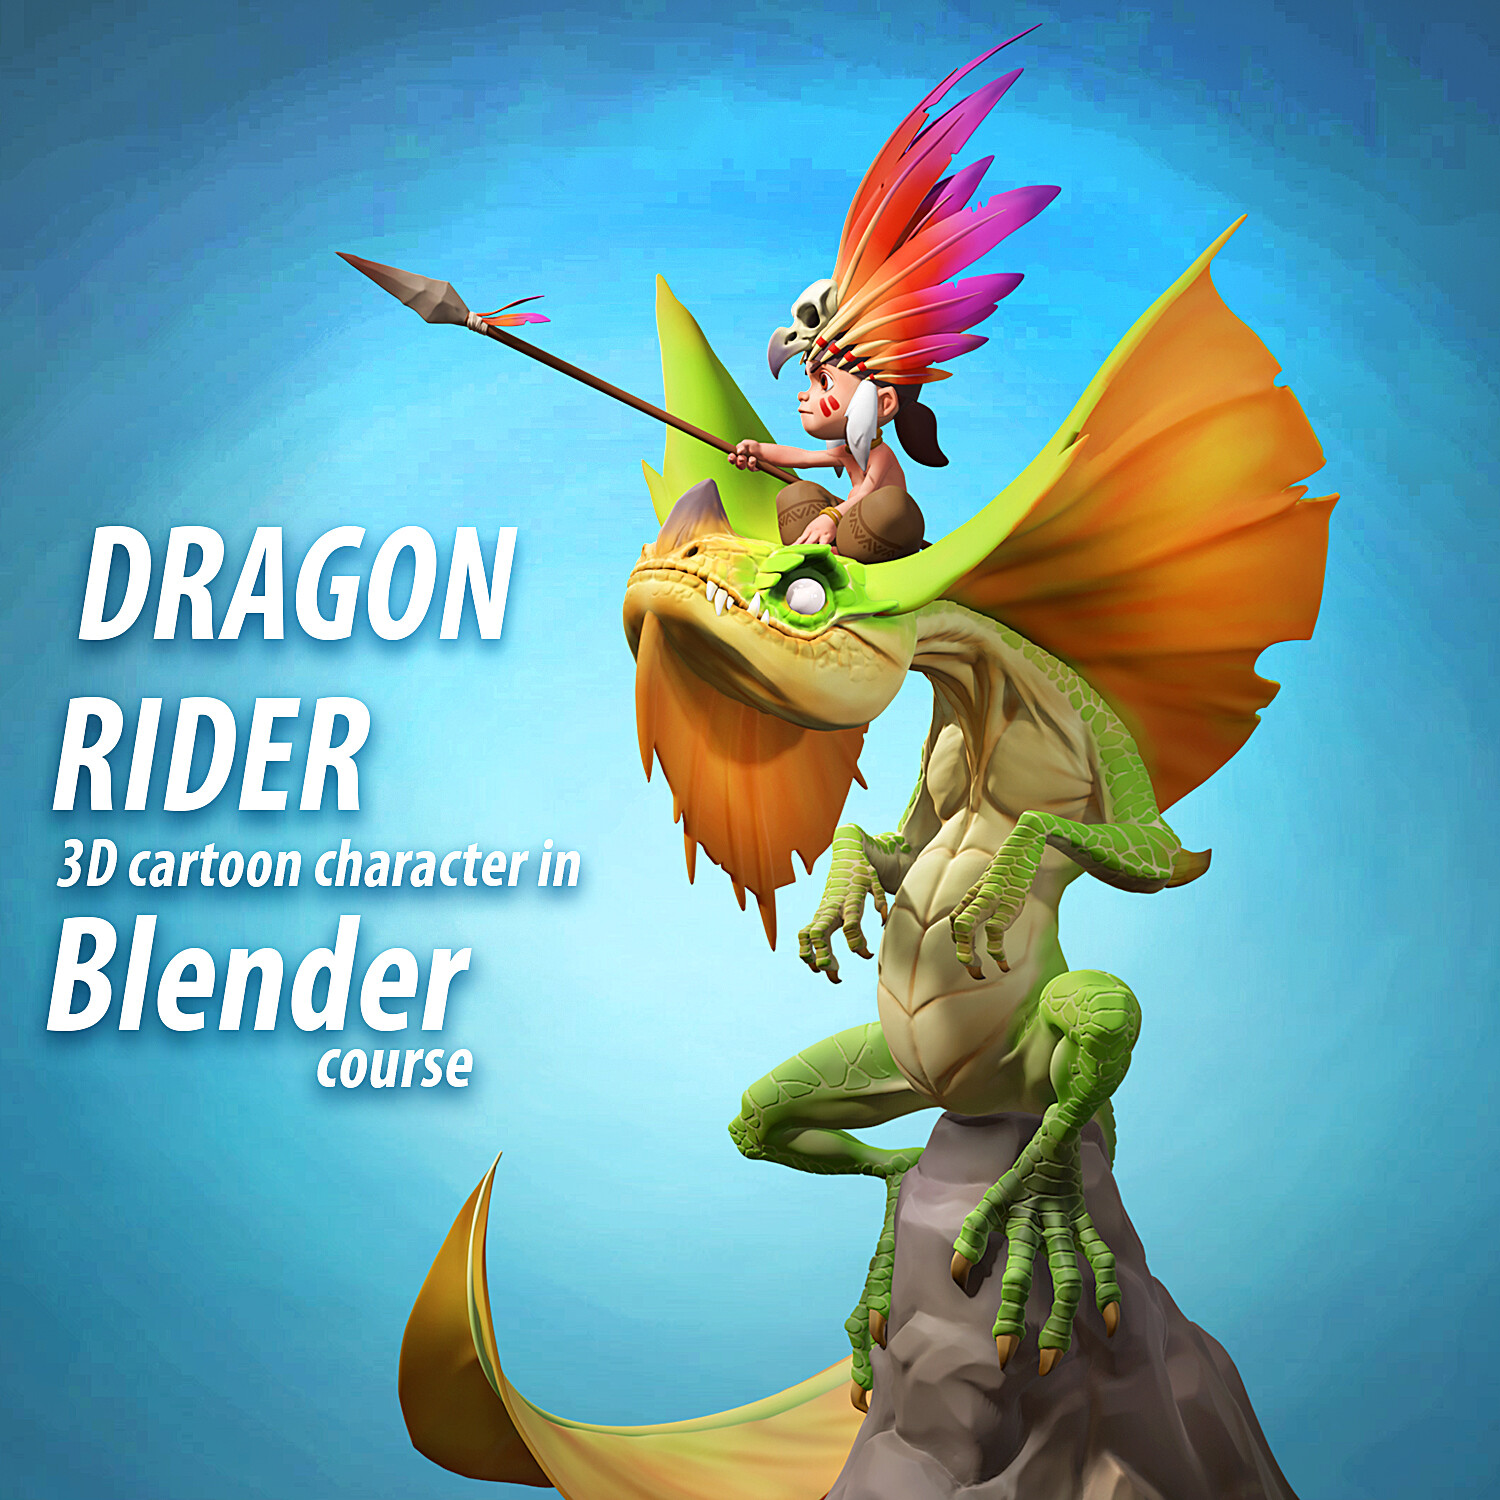 ArtStation - Dragon Rider 3D cartoon character in Blender creation course